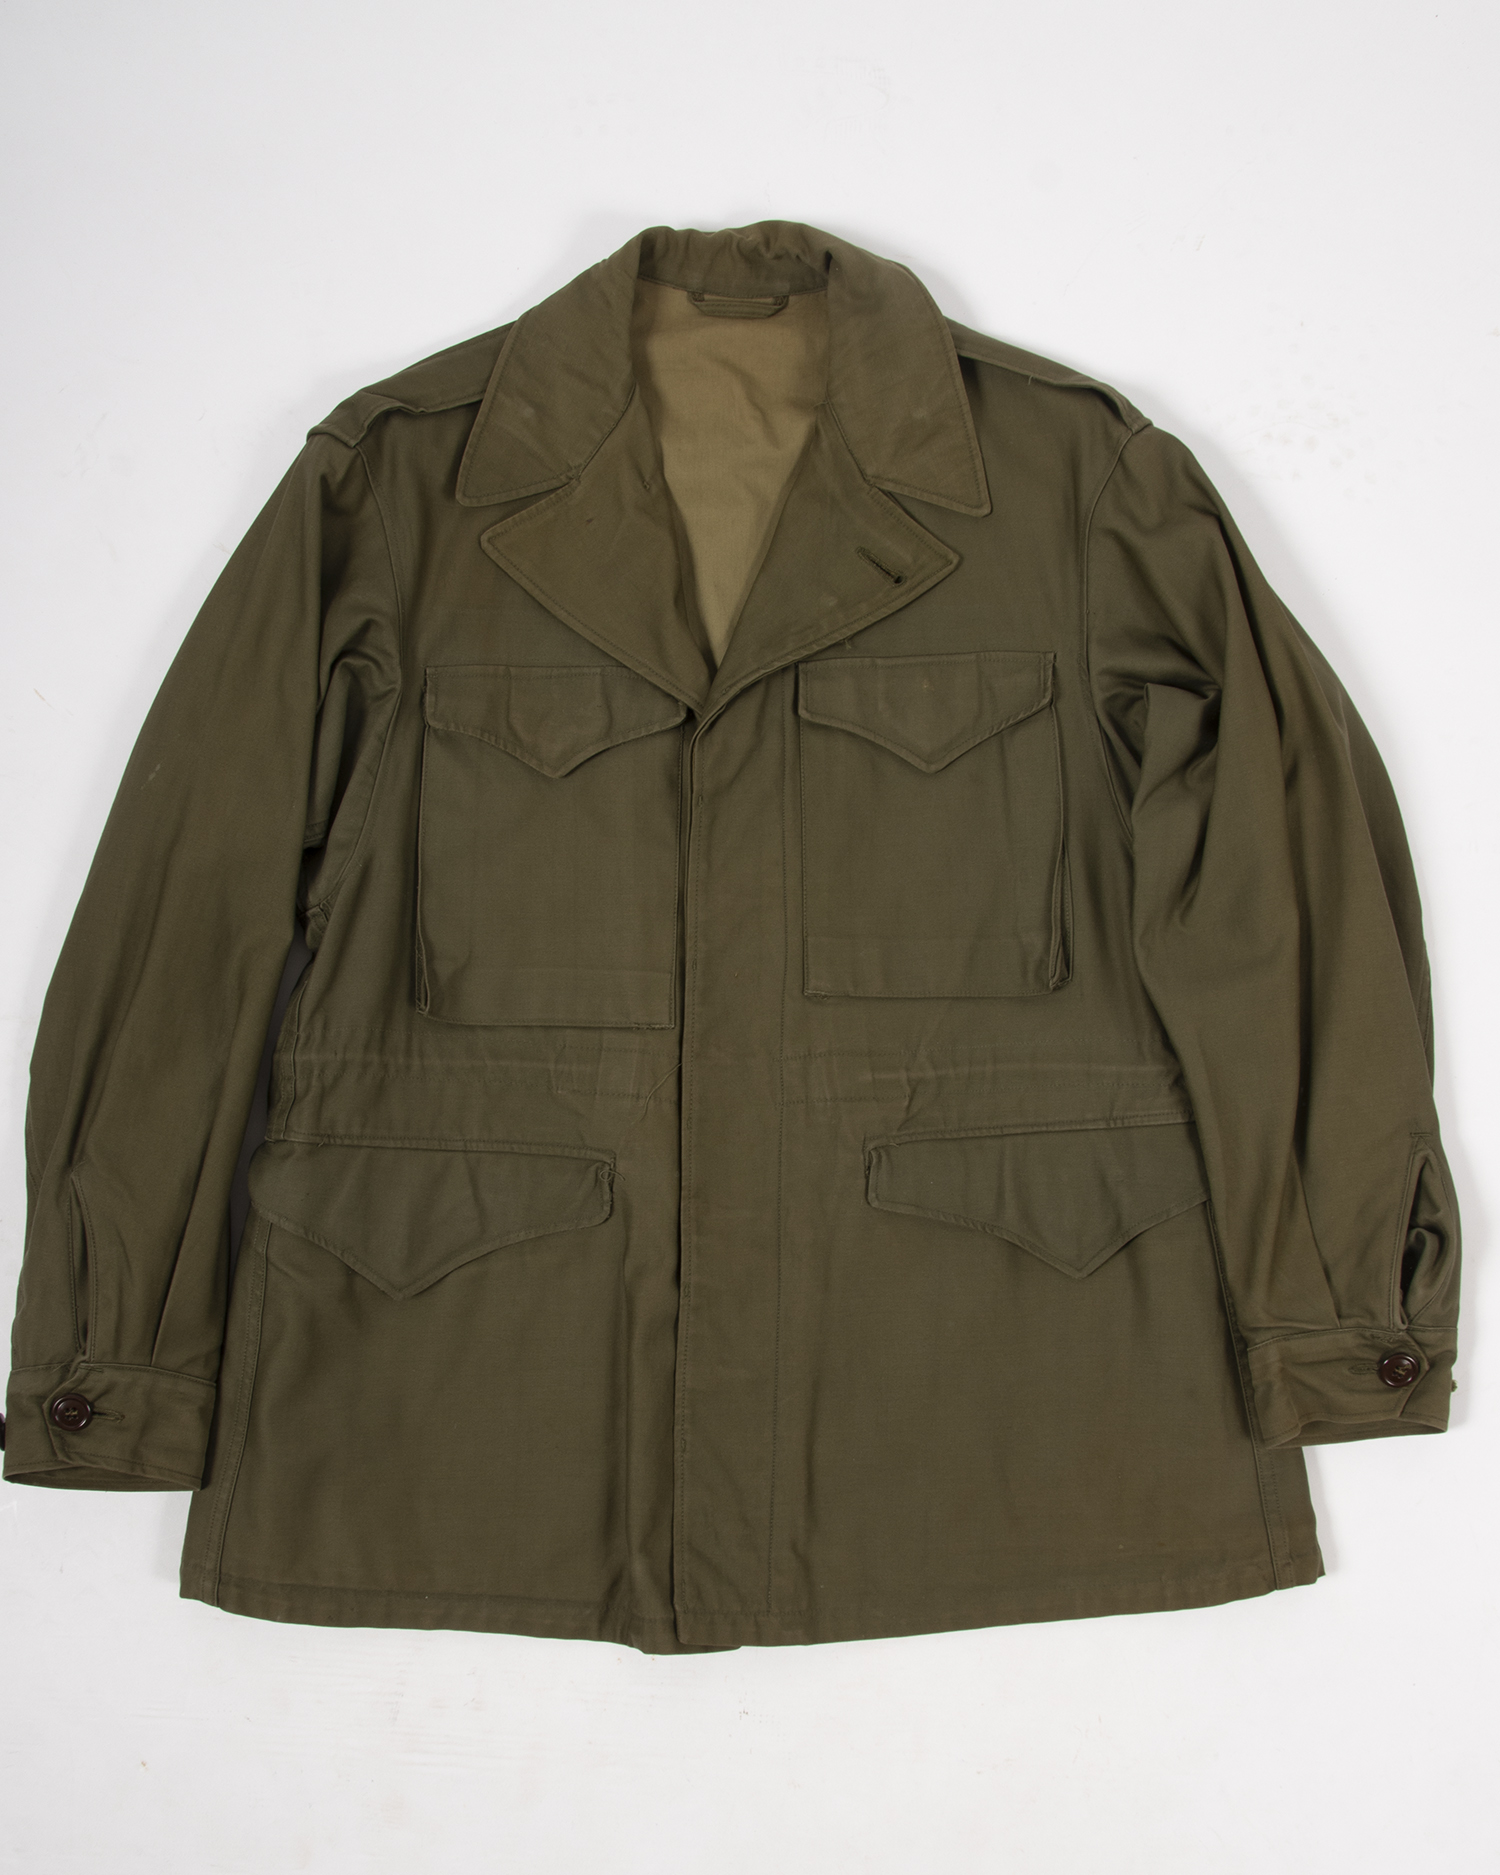 Vintage Us Army M 1943 M43 Field Jacket Ww2 Era Size 36l Ph